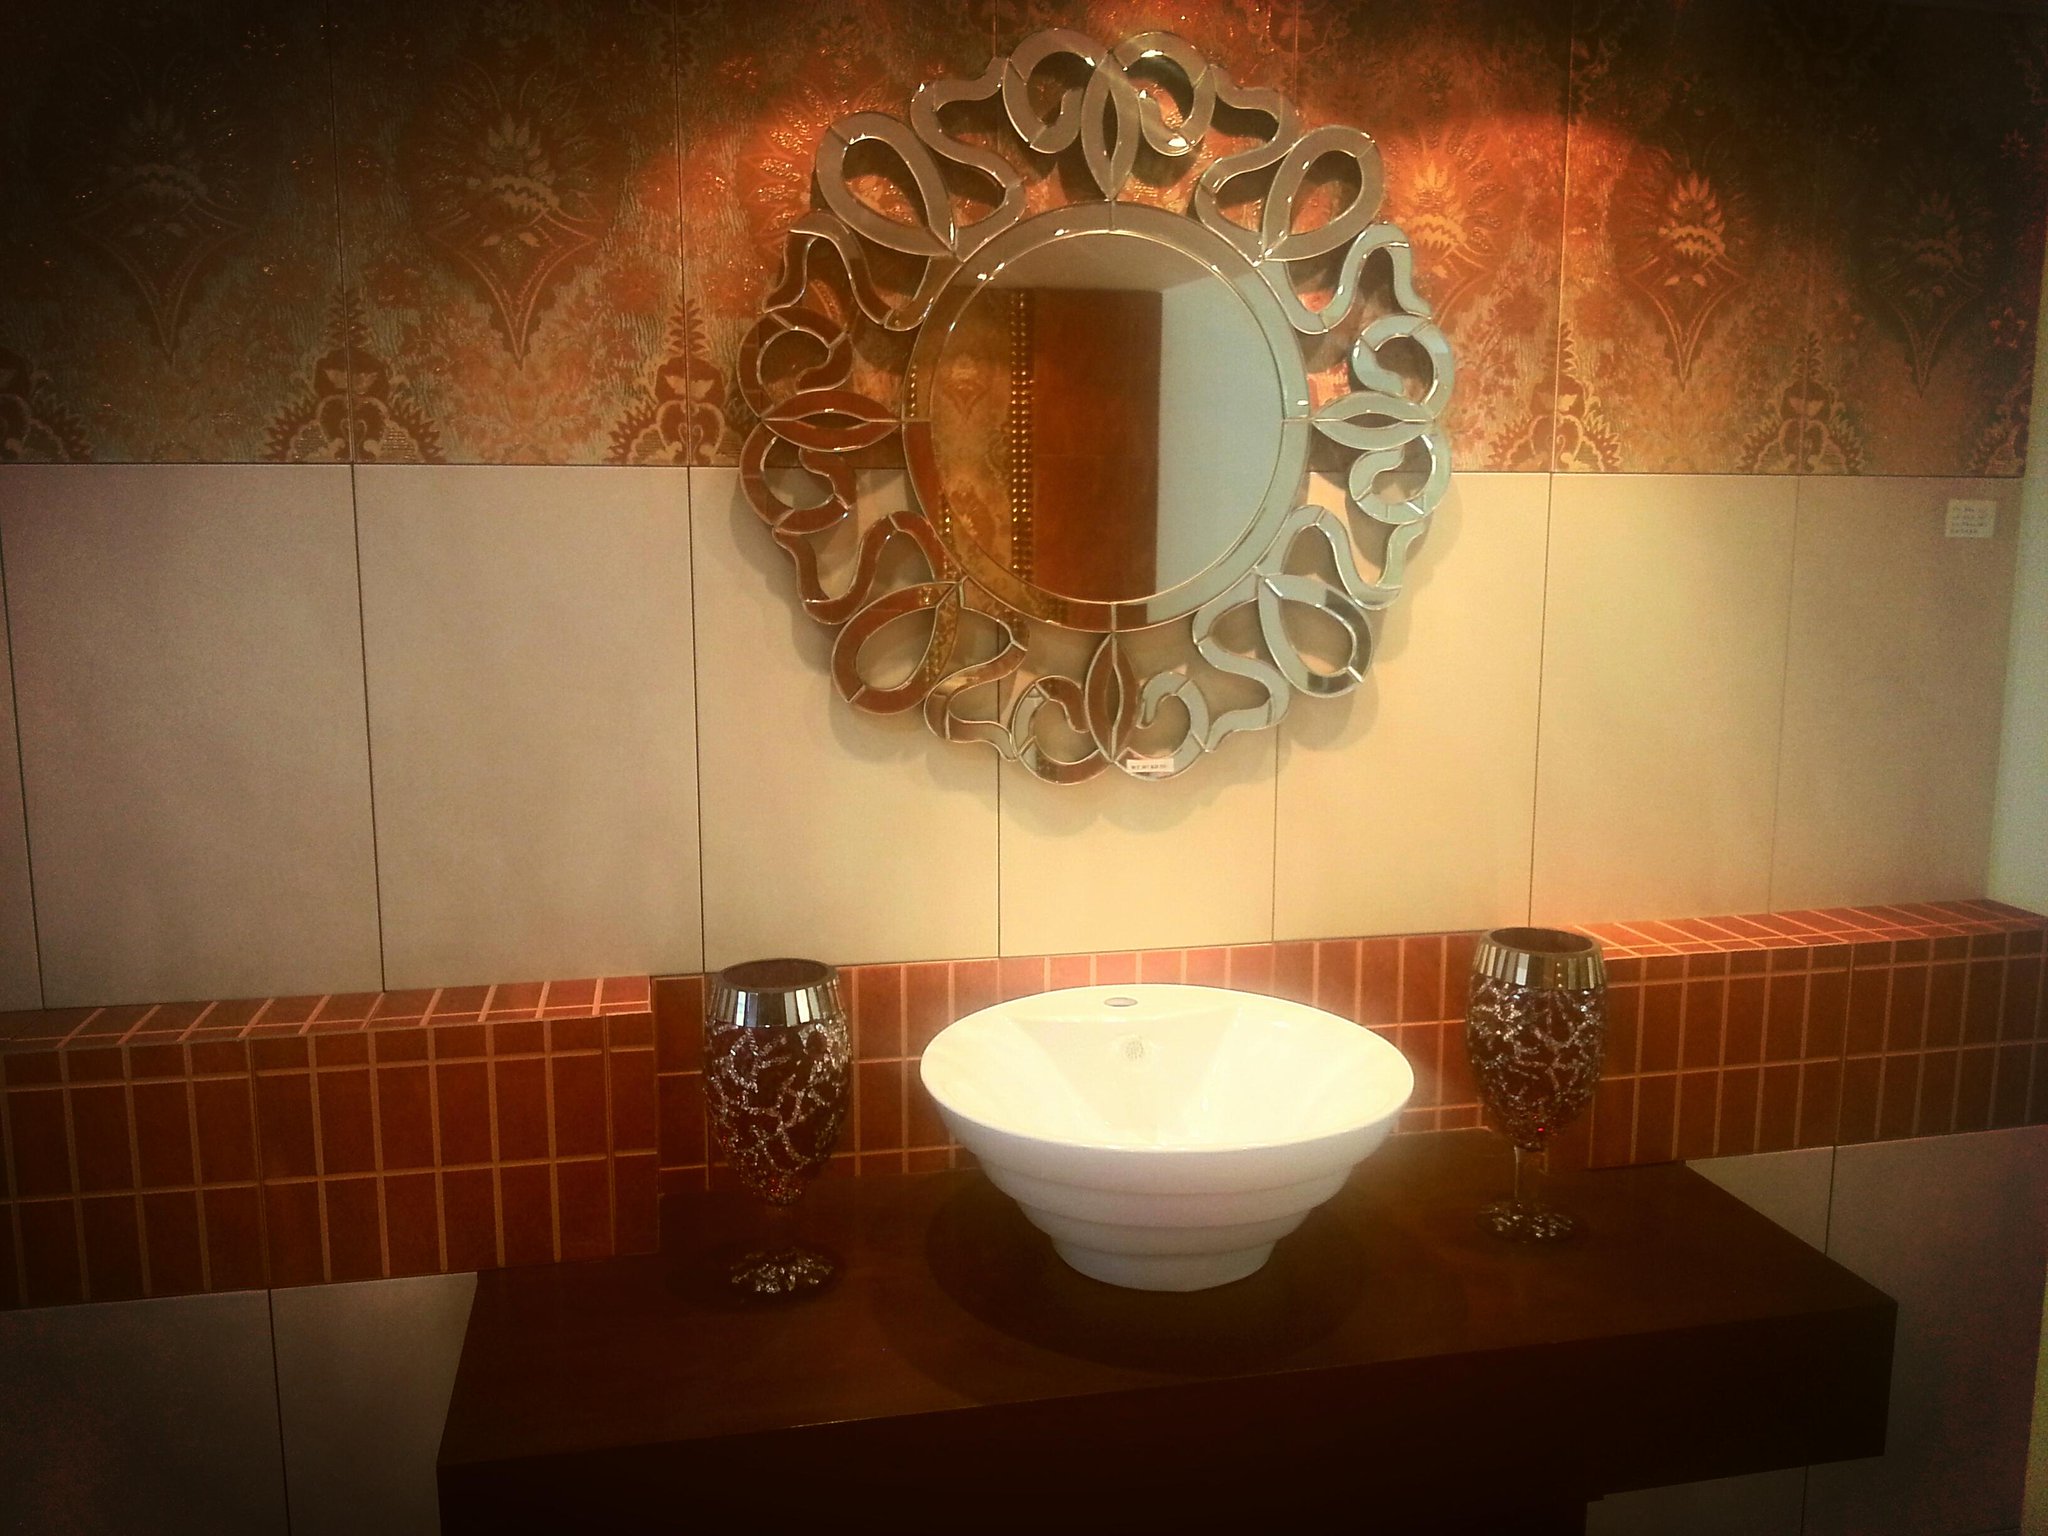 superb bathrooms by Verona House - تشكيلة حمامات رائعة من فيرونا هاوس A-86_yrCYAEjLR3